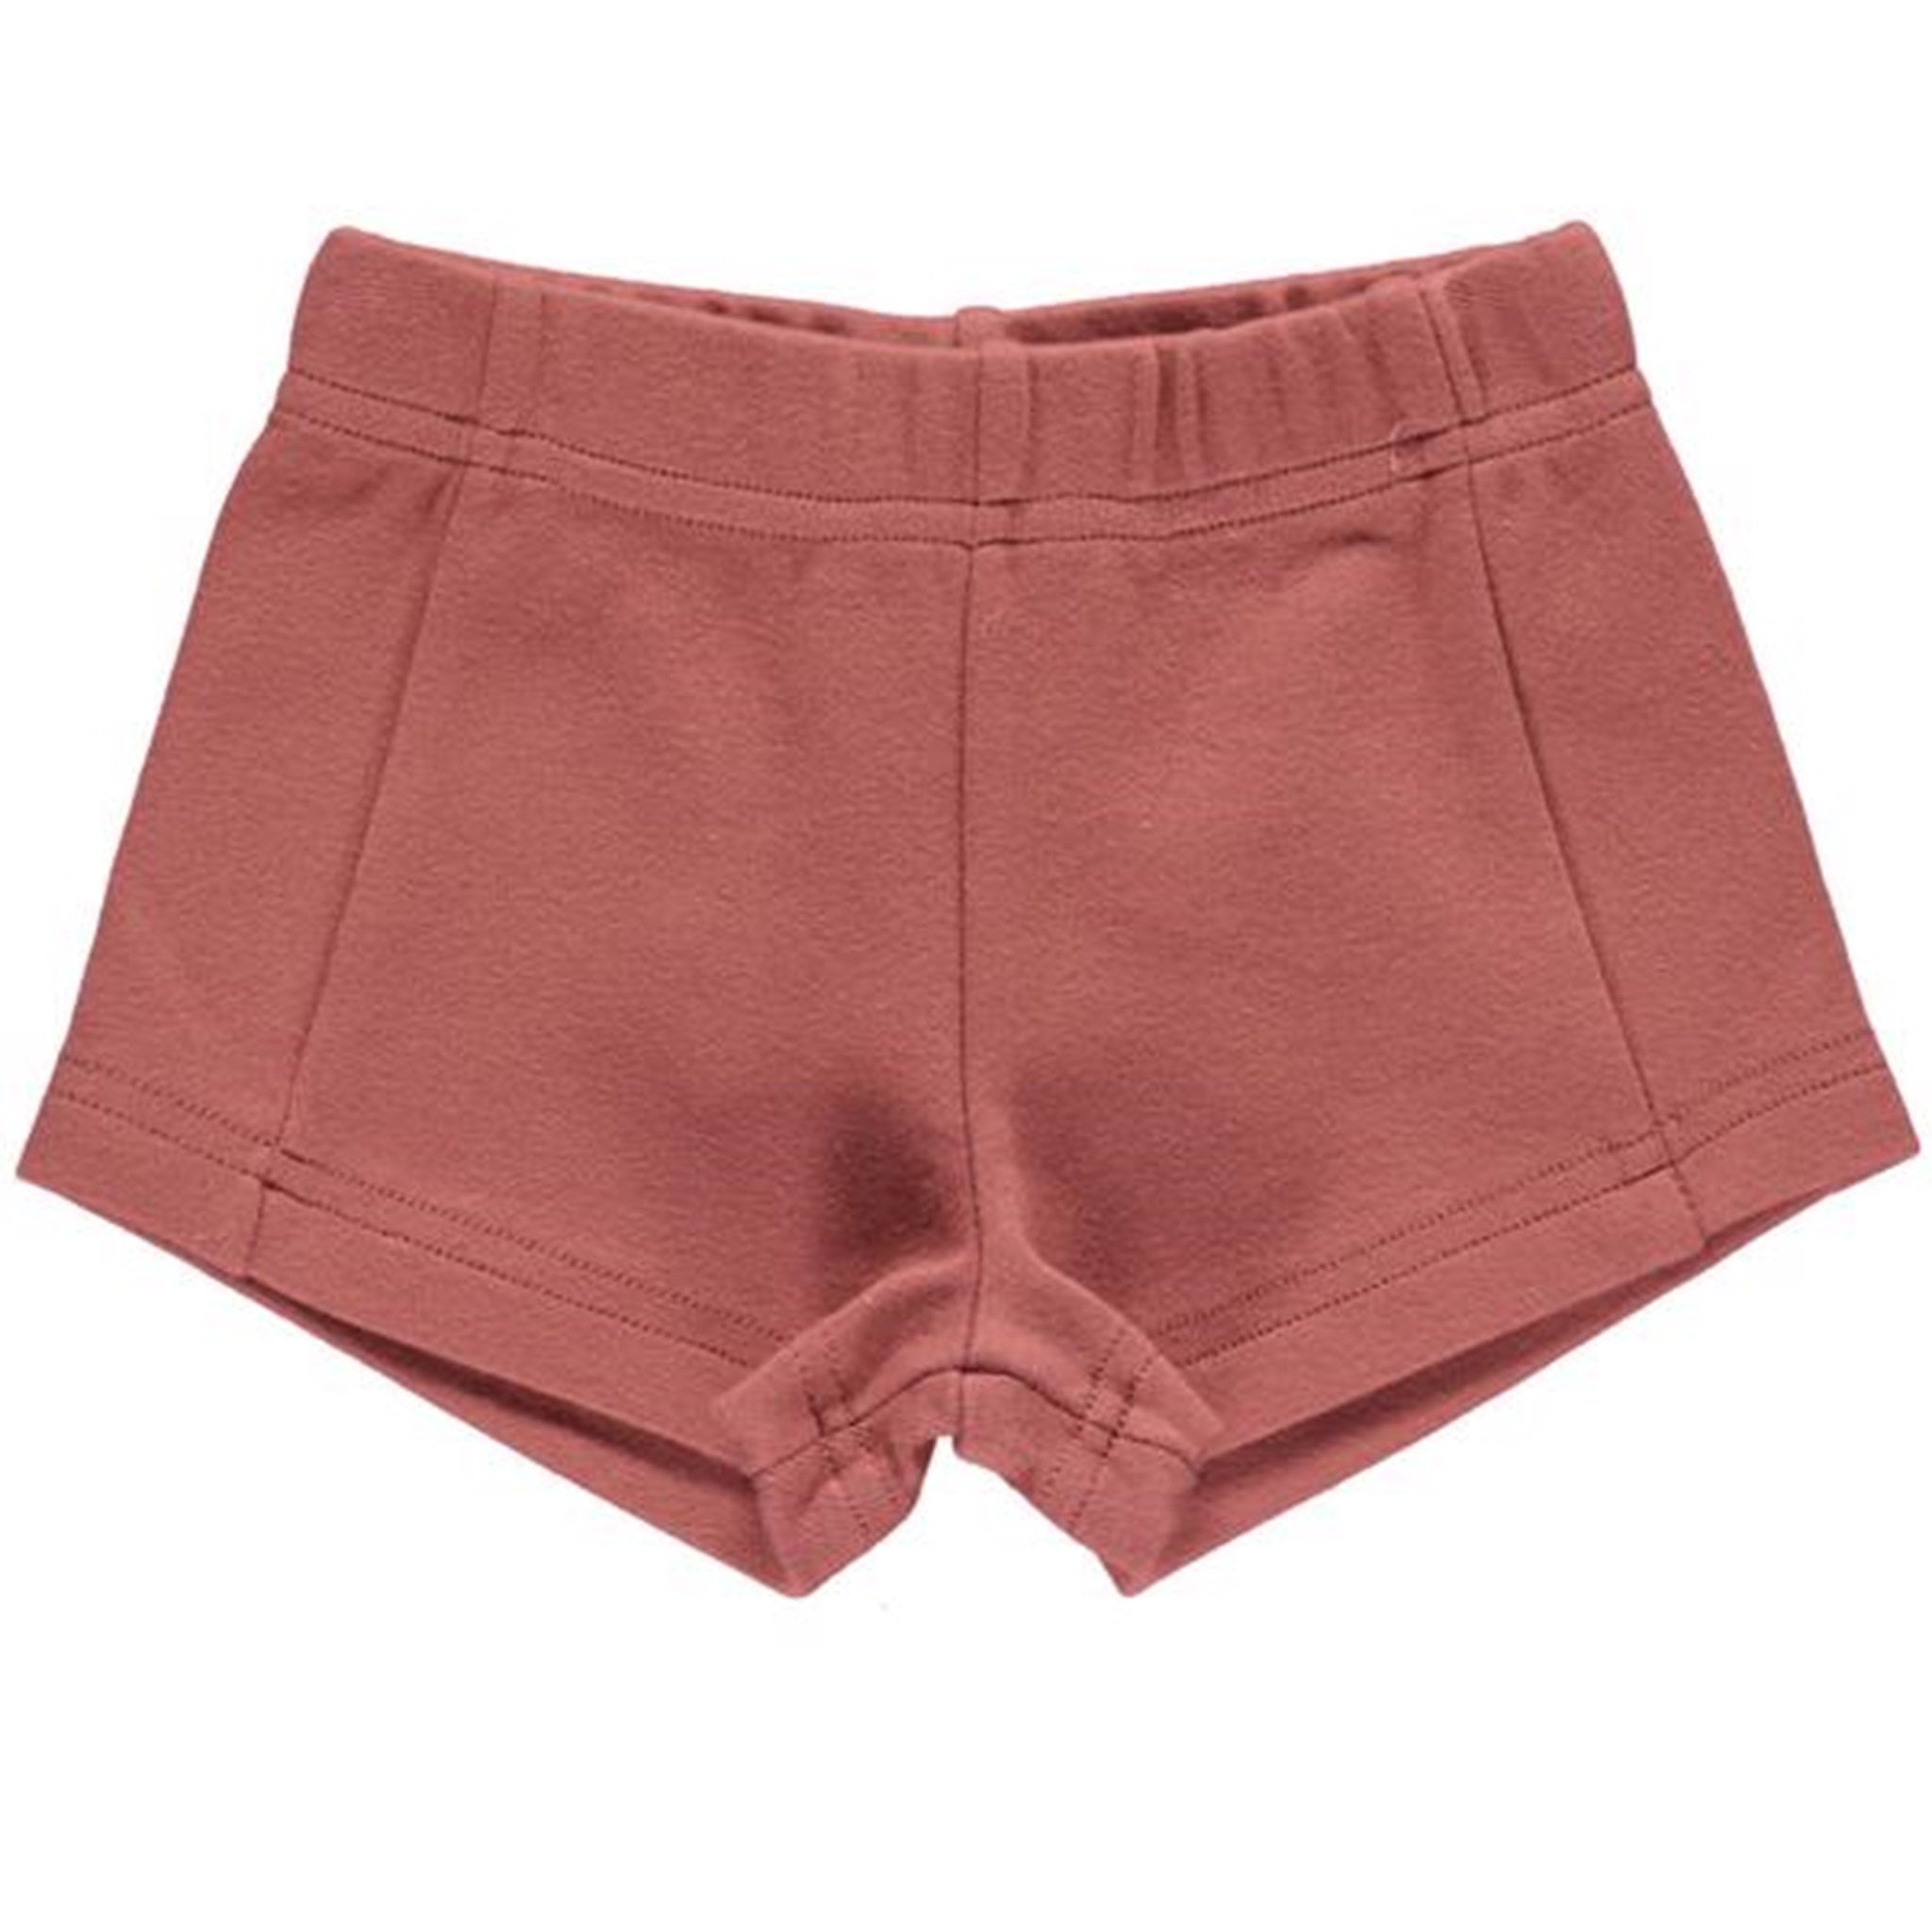 MarMar Red Blush Pusle Shorts/Bloomers